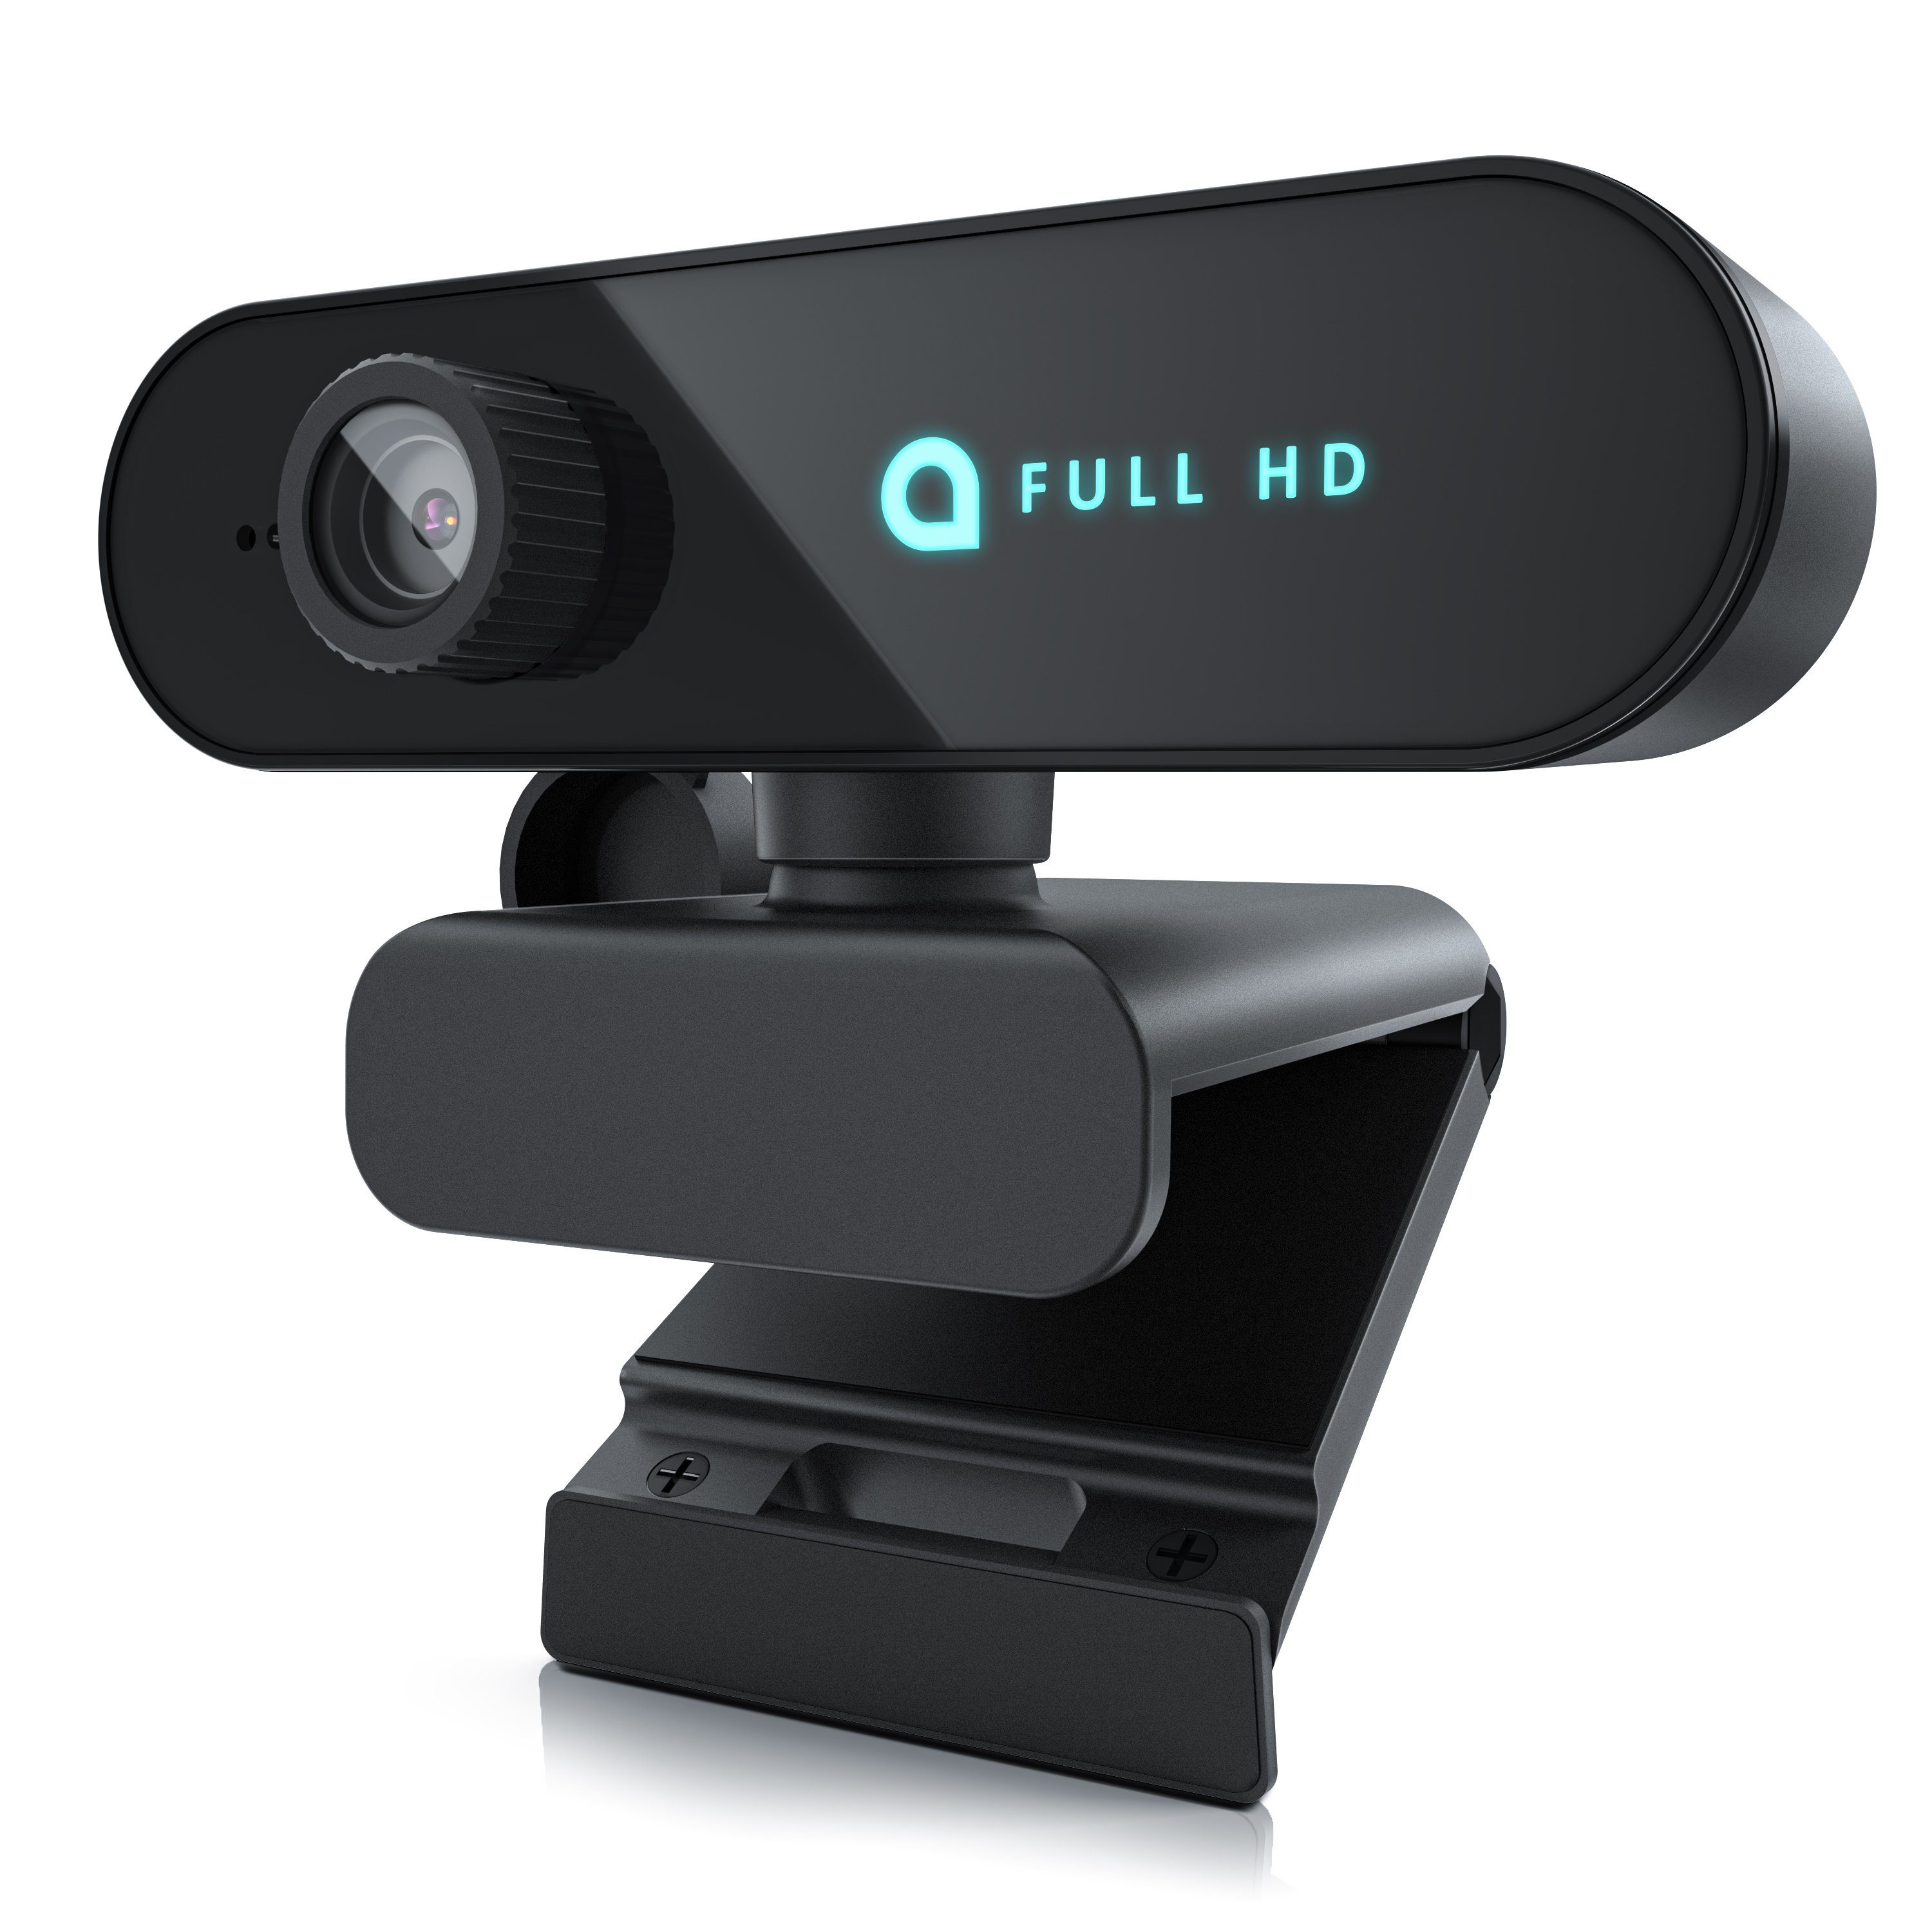 Aplic Webcams online kaufen | OTTO